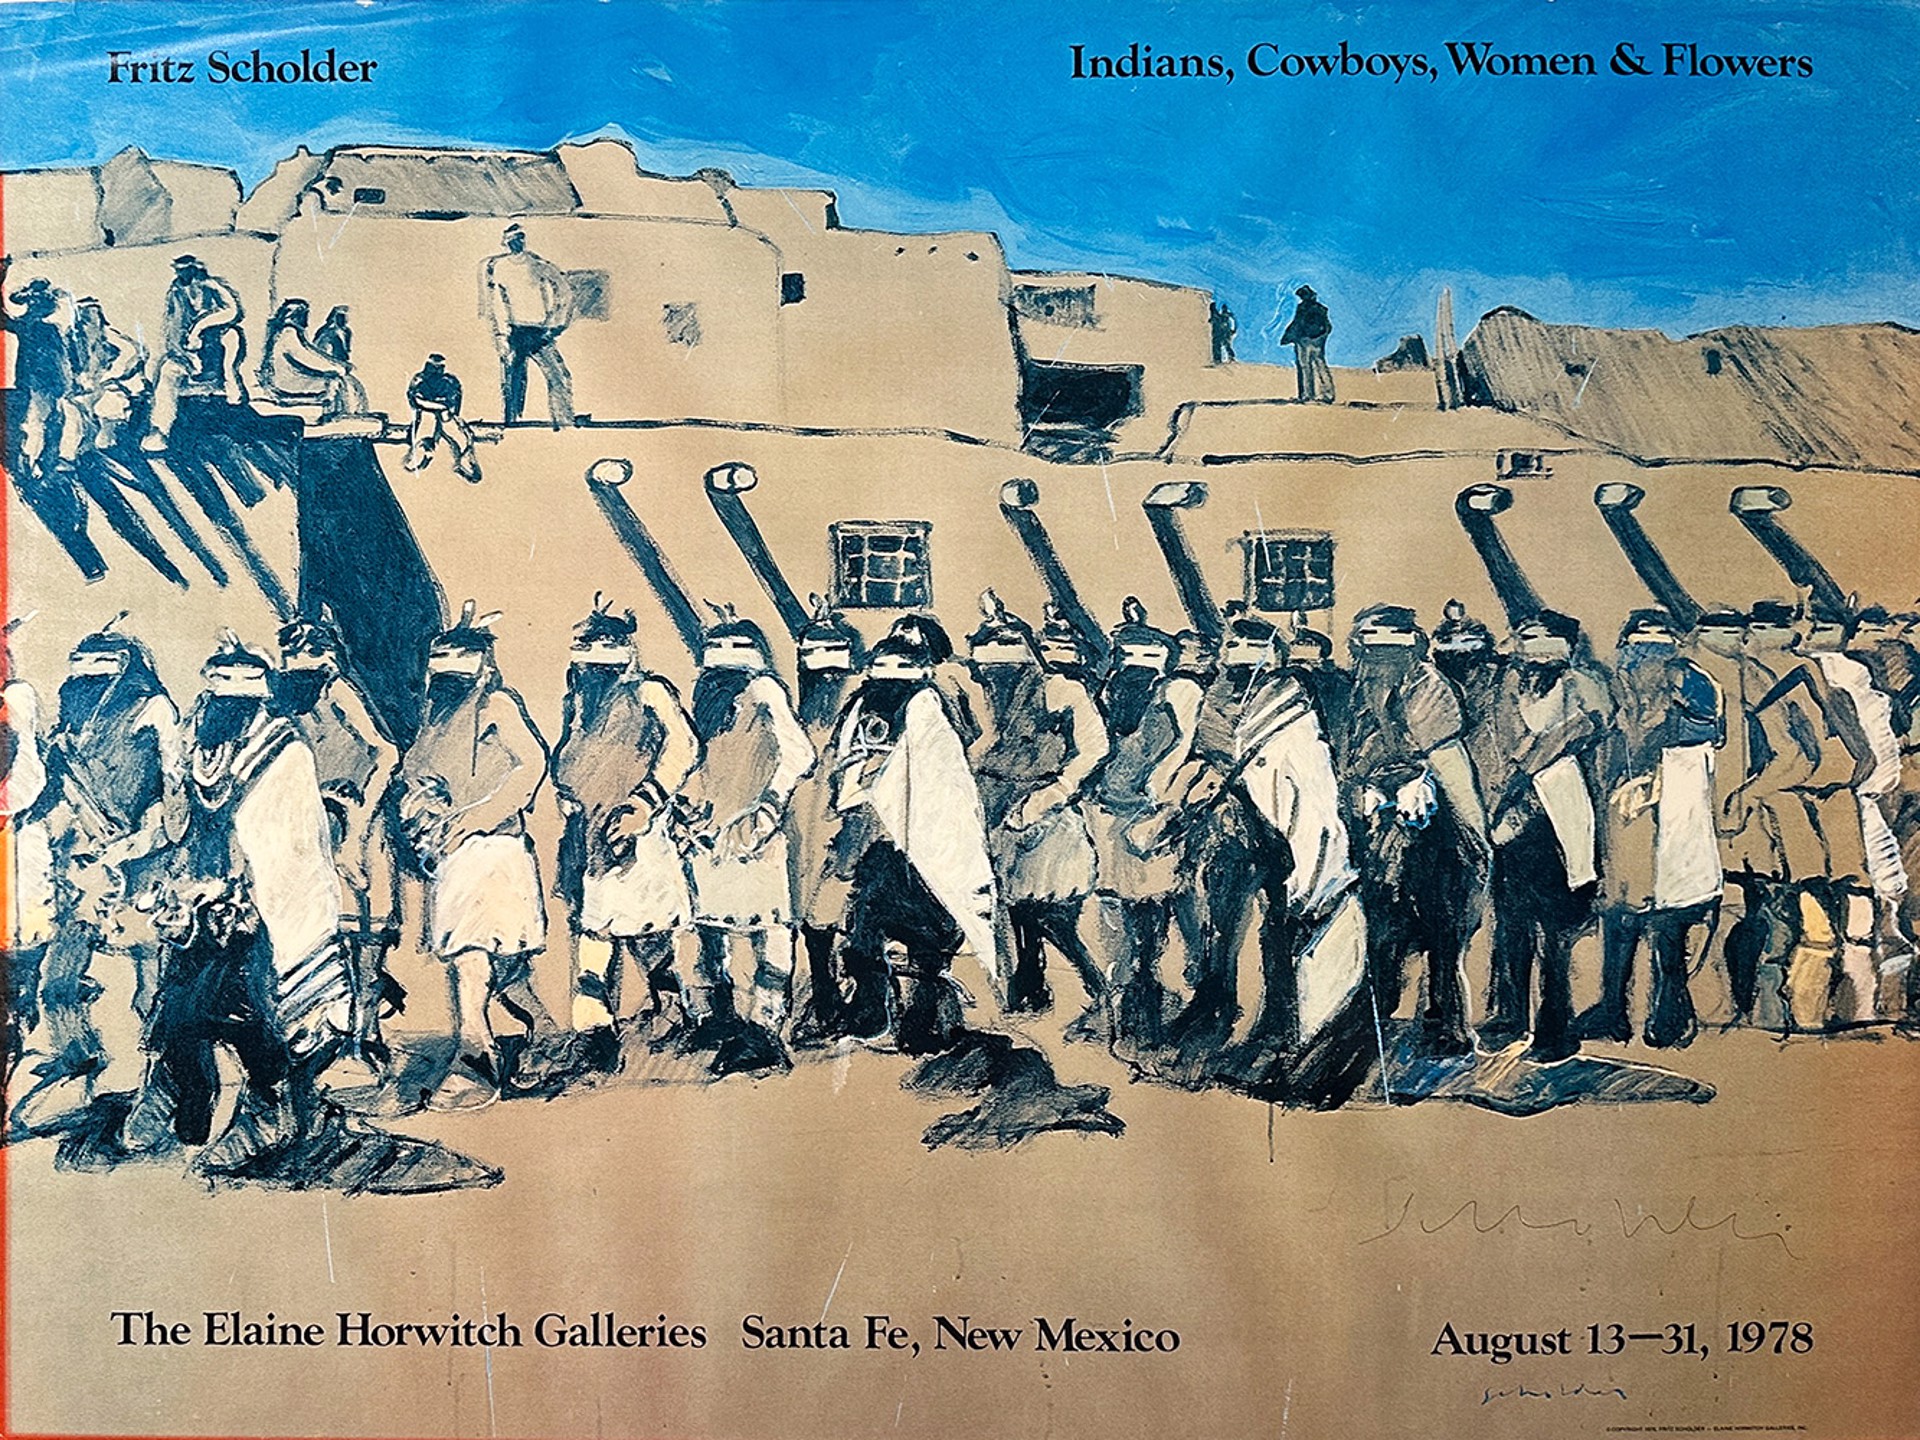 Indians, Cowboys, Women & Flowers (Taos Pueblo Image) by Fritz Scholder